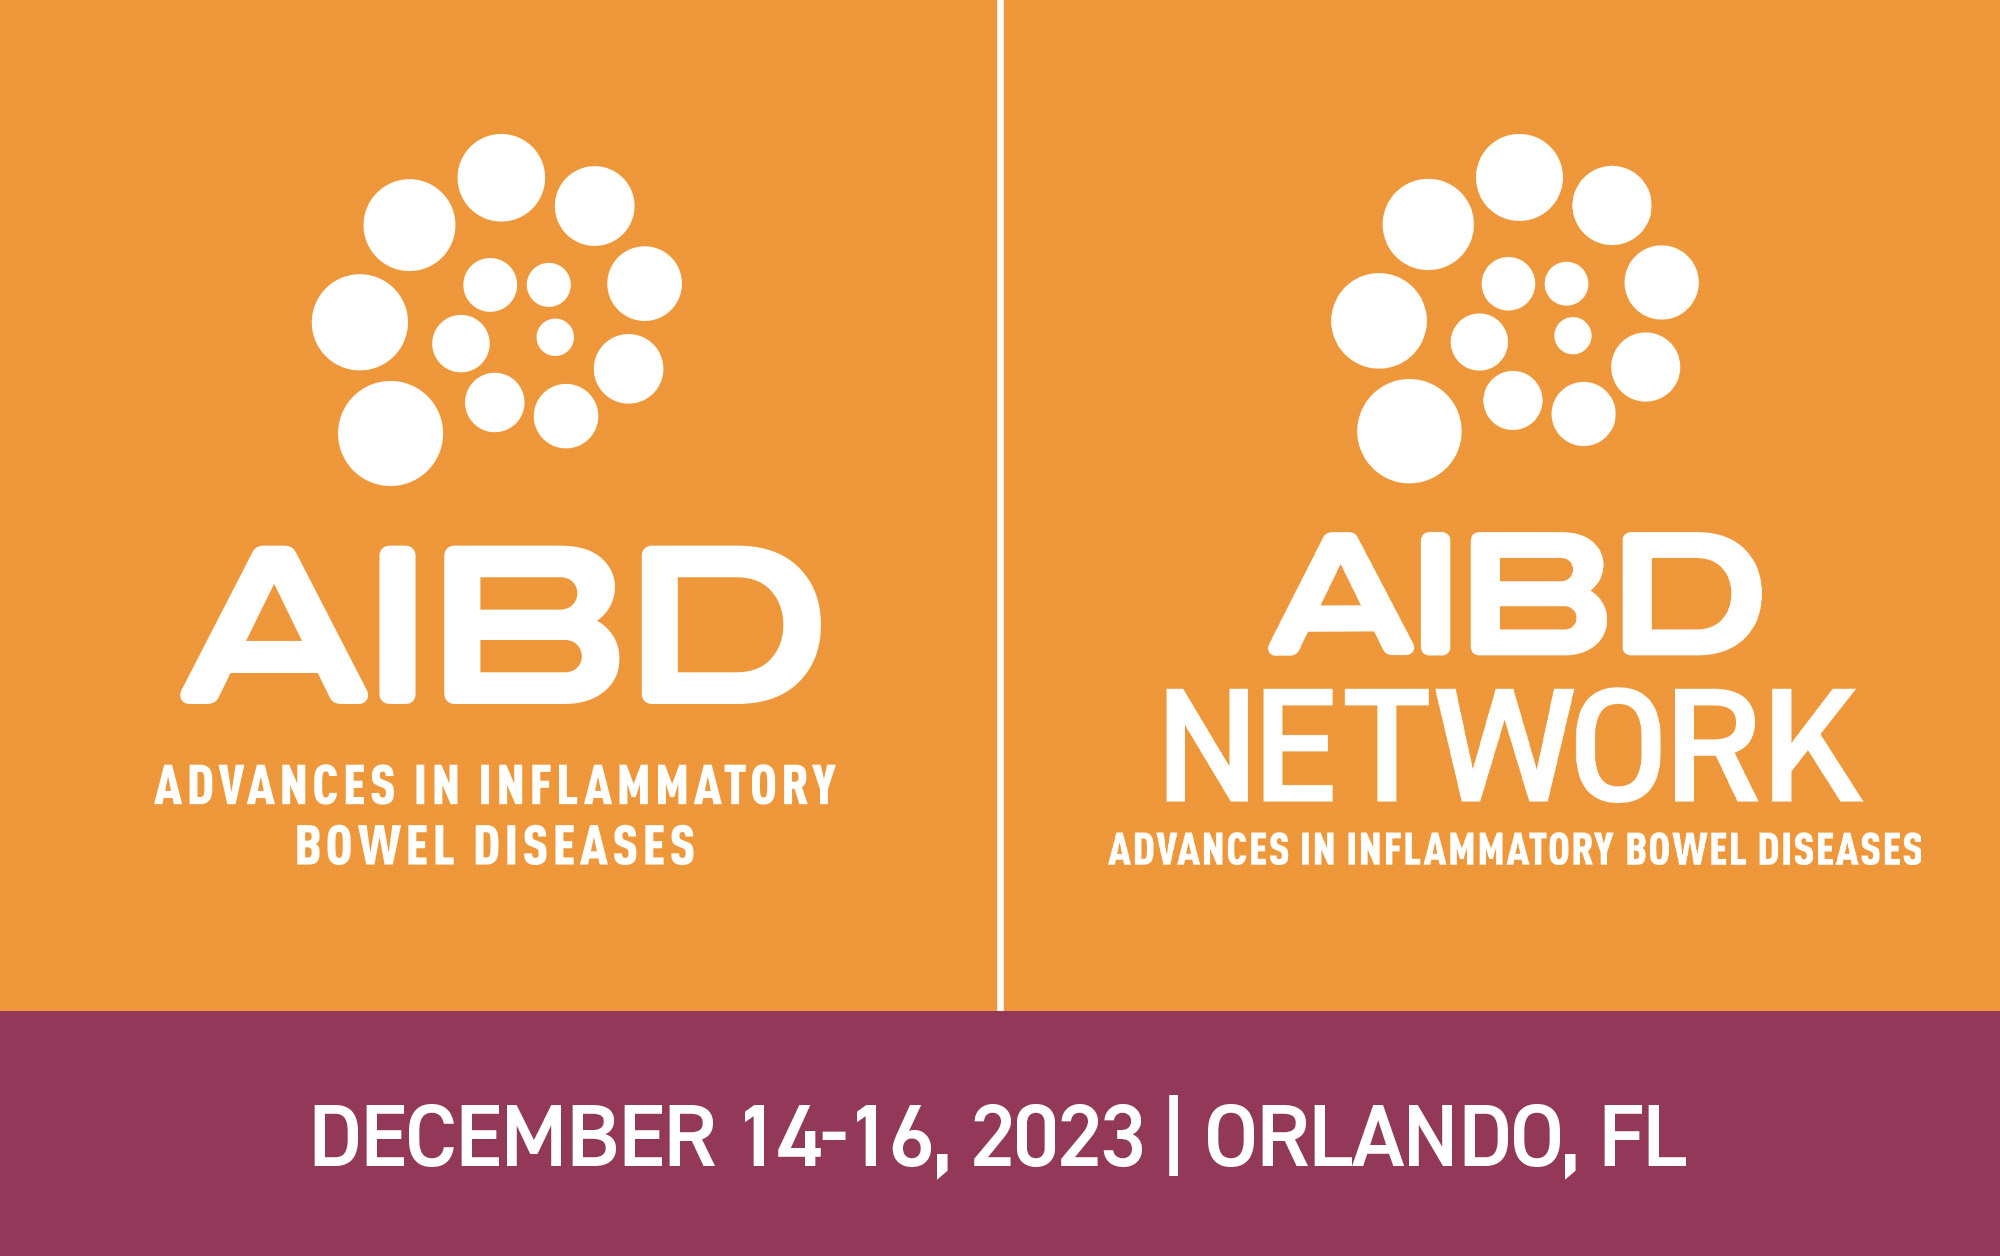 AIBD, AIBD Network logos